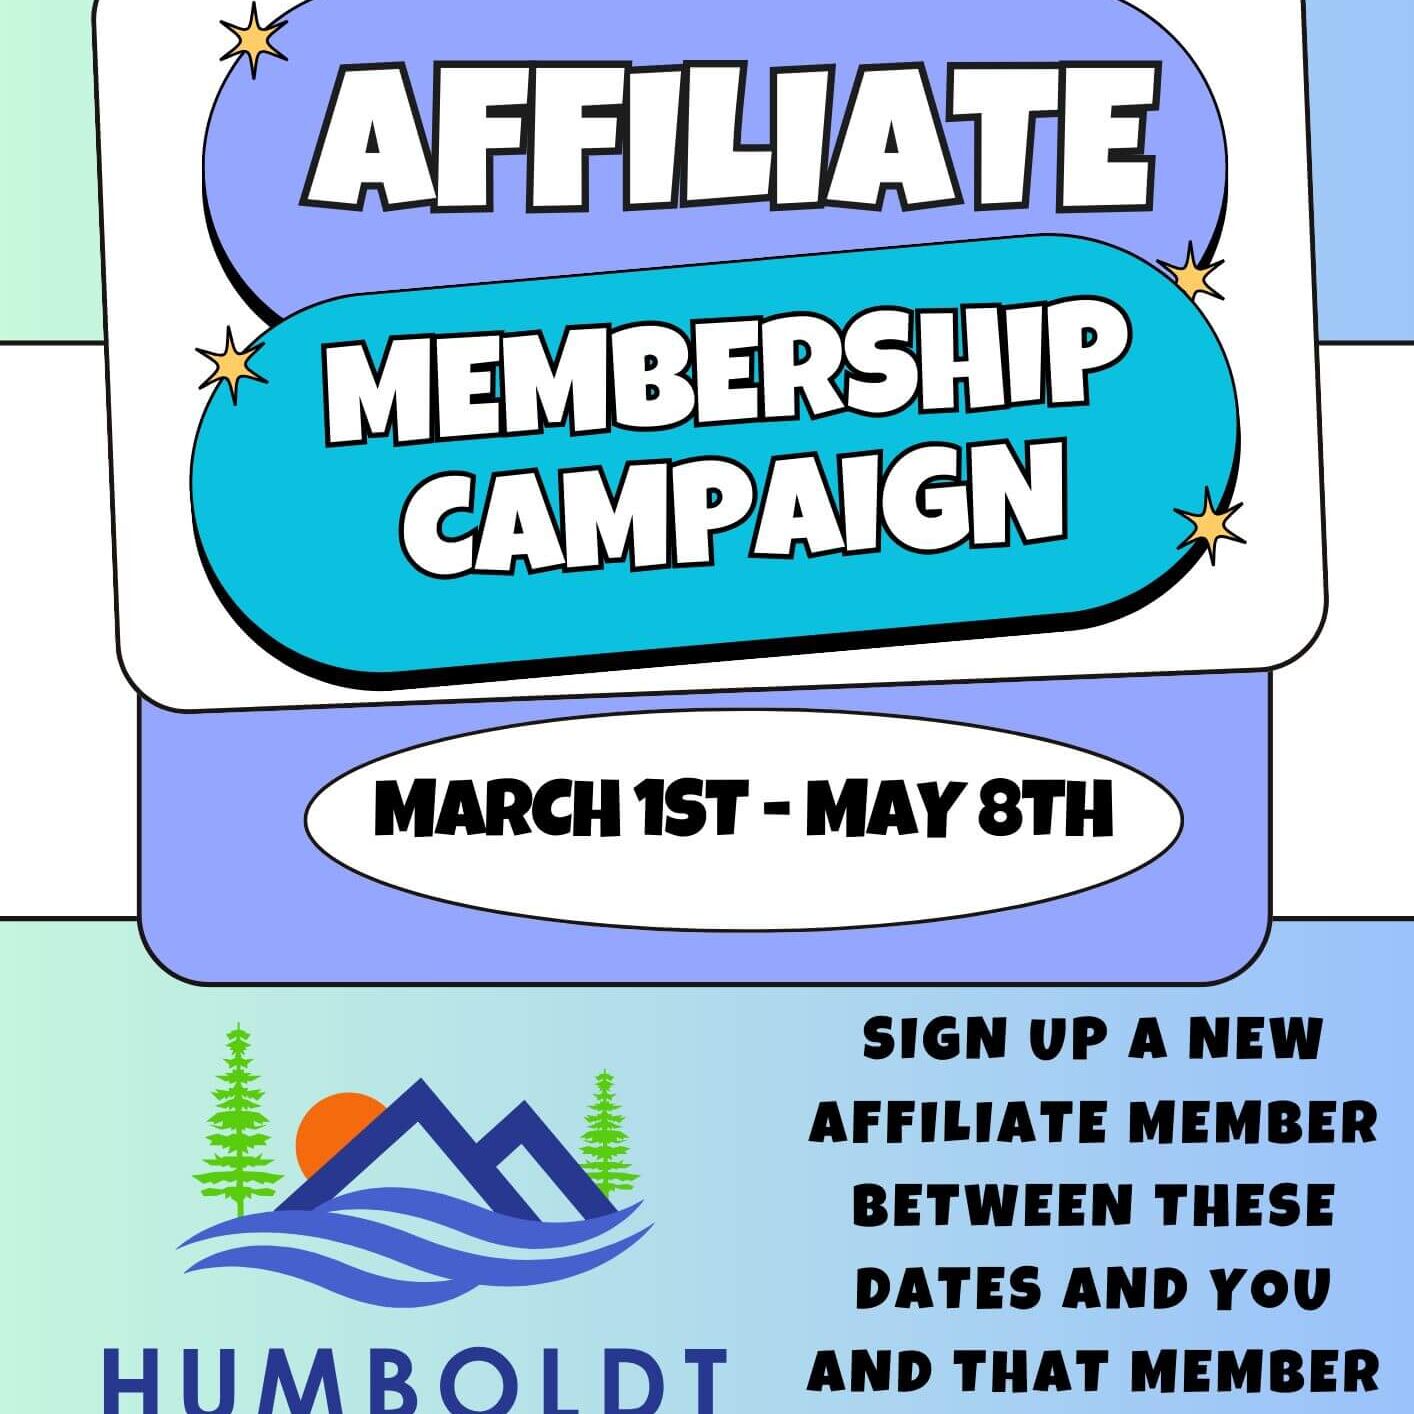 Affiliate membership campaign